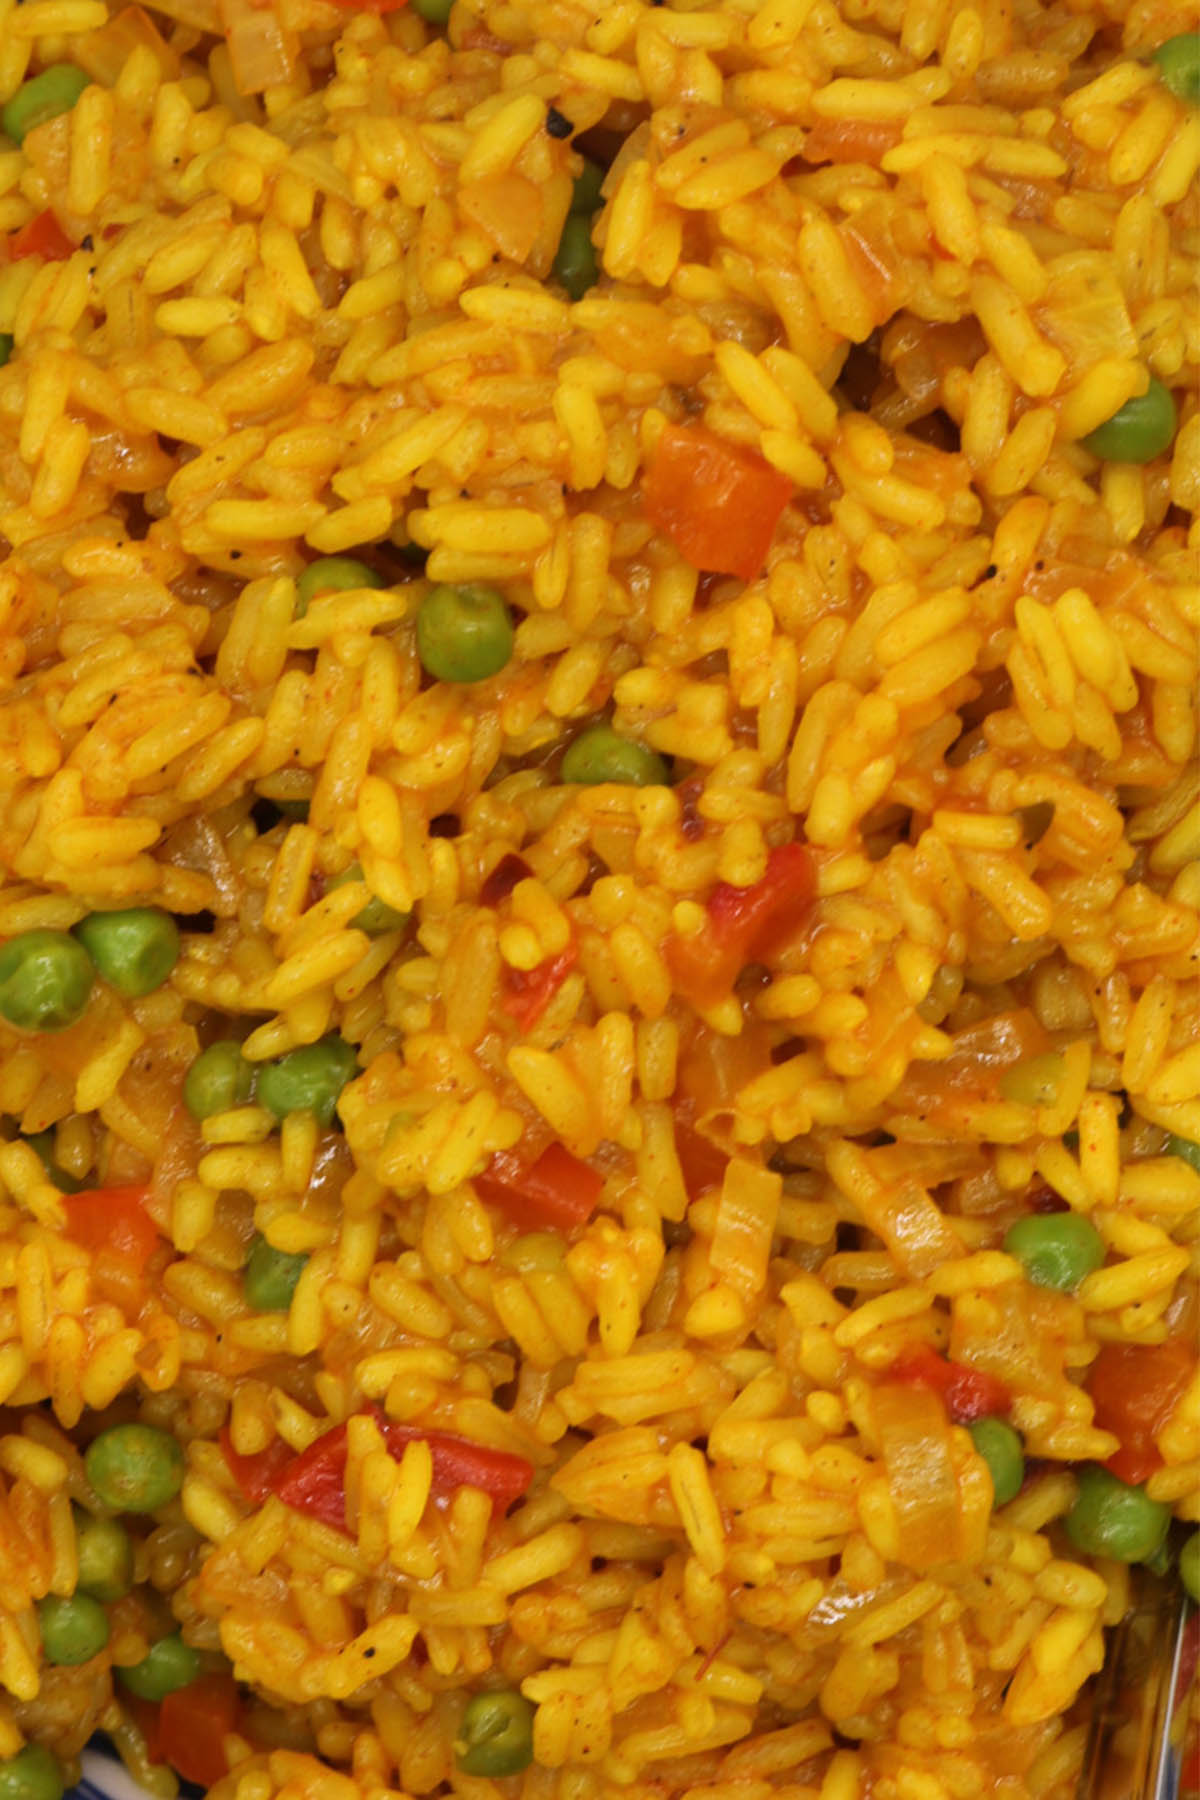 Nando's Spicy Rice, Nando's Spicy Rice